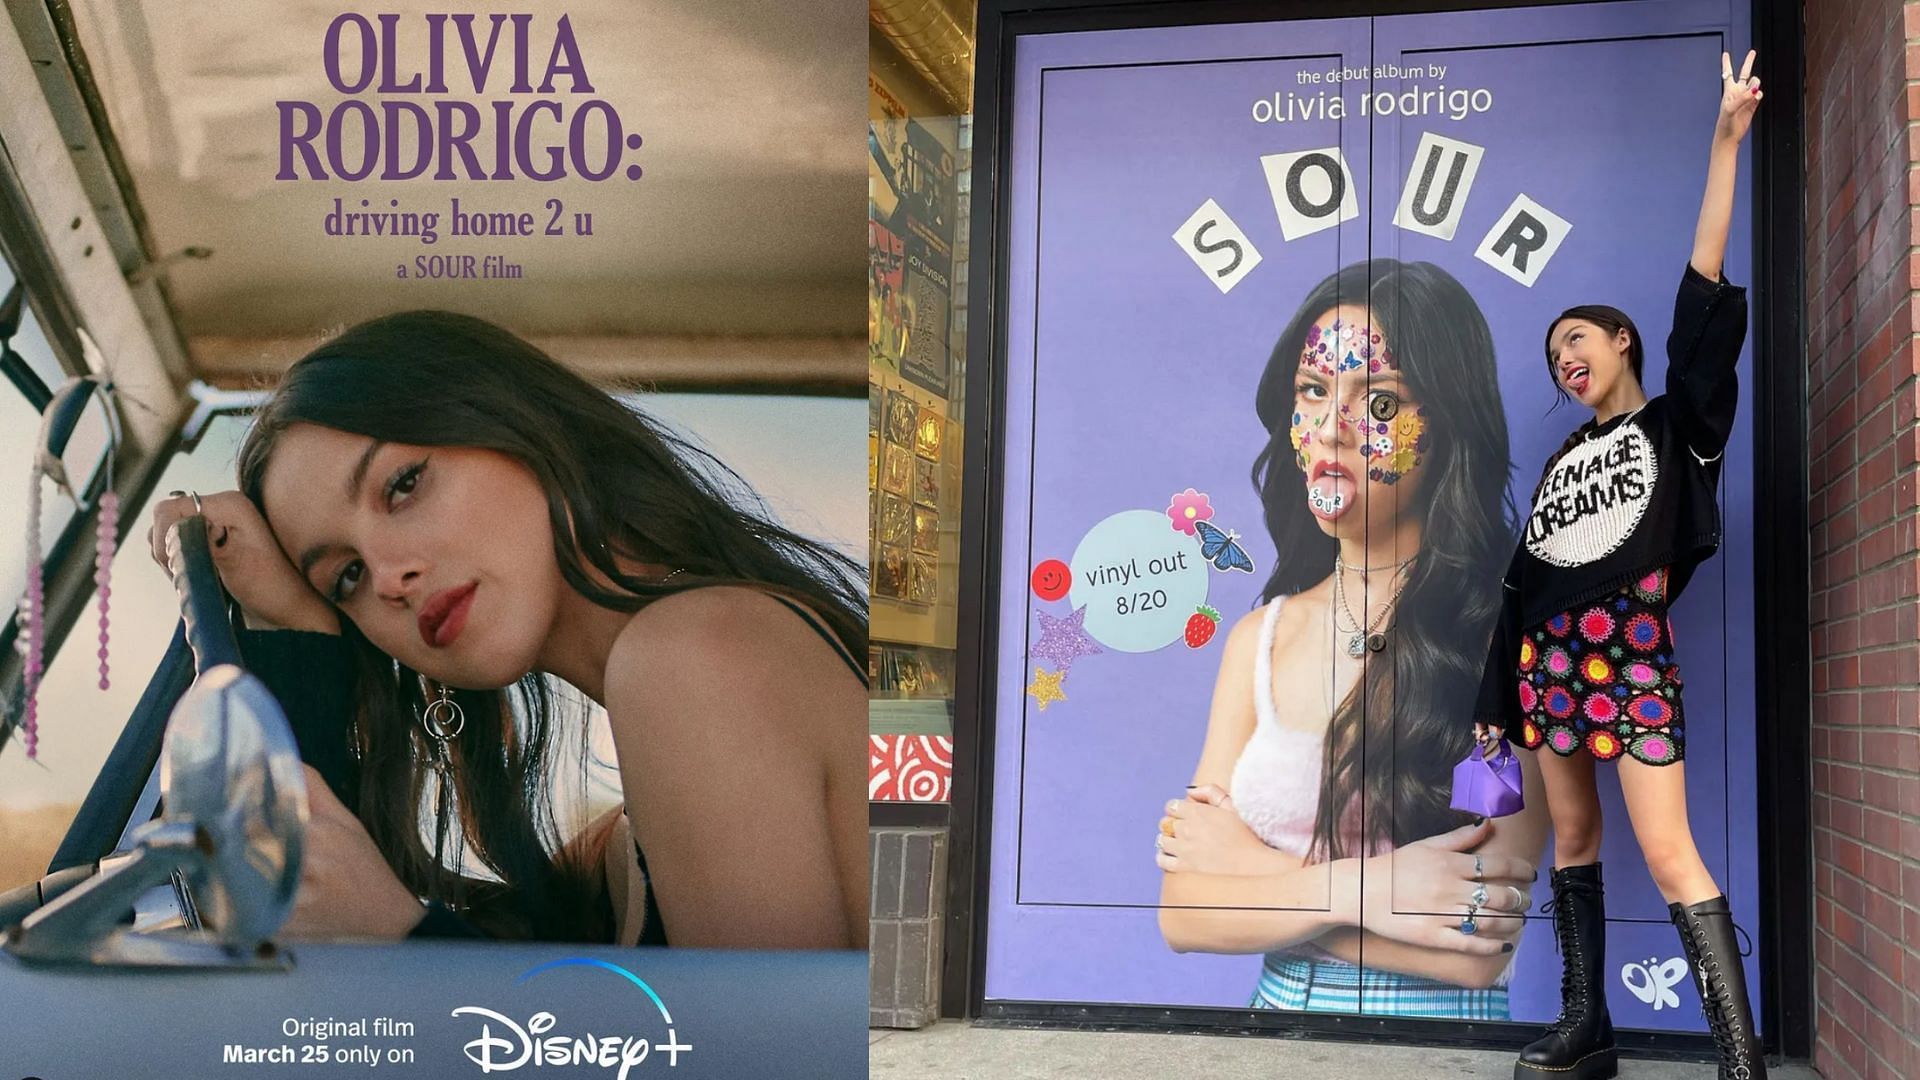 Olivia Rodrigo&#039;s documentary titled Olivia Rodrigo: driving home 2 u to premiere on March 25 exclusively on Disney+ (Image via @oliviarodrigo/Instagram)